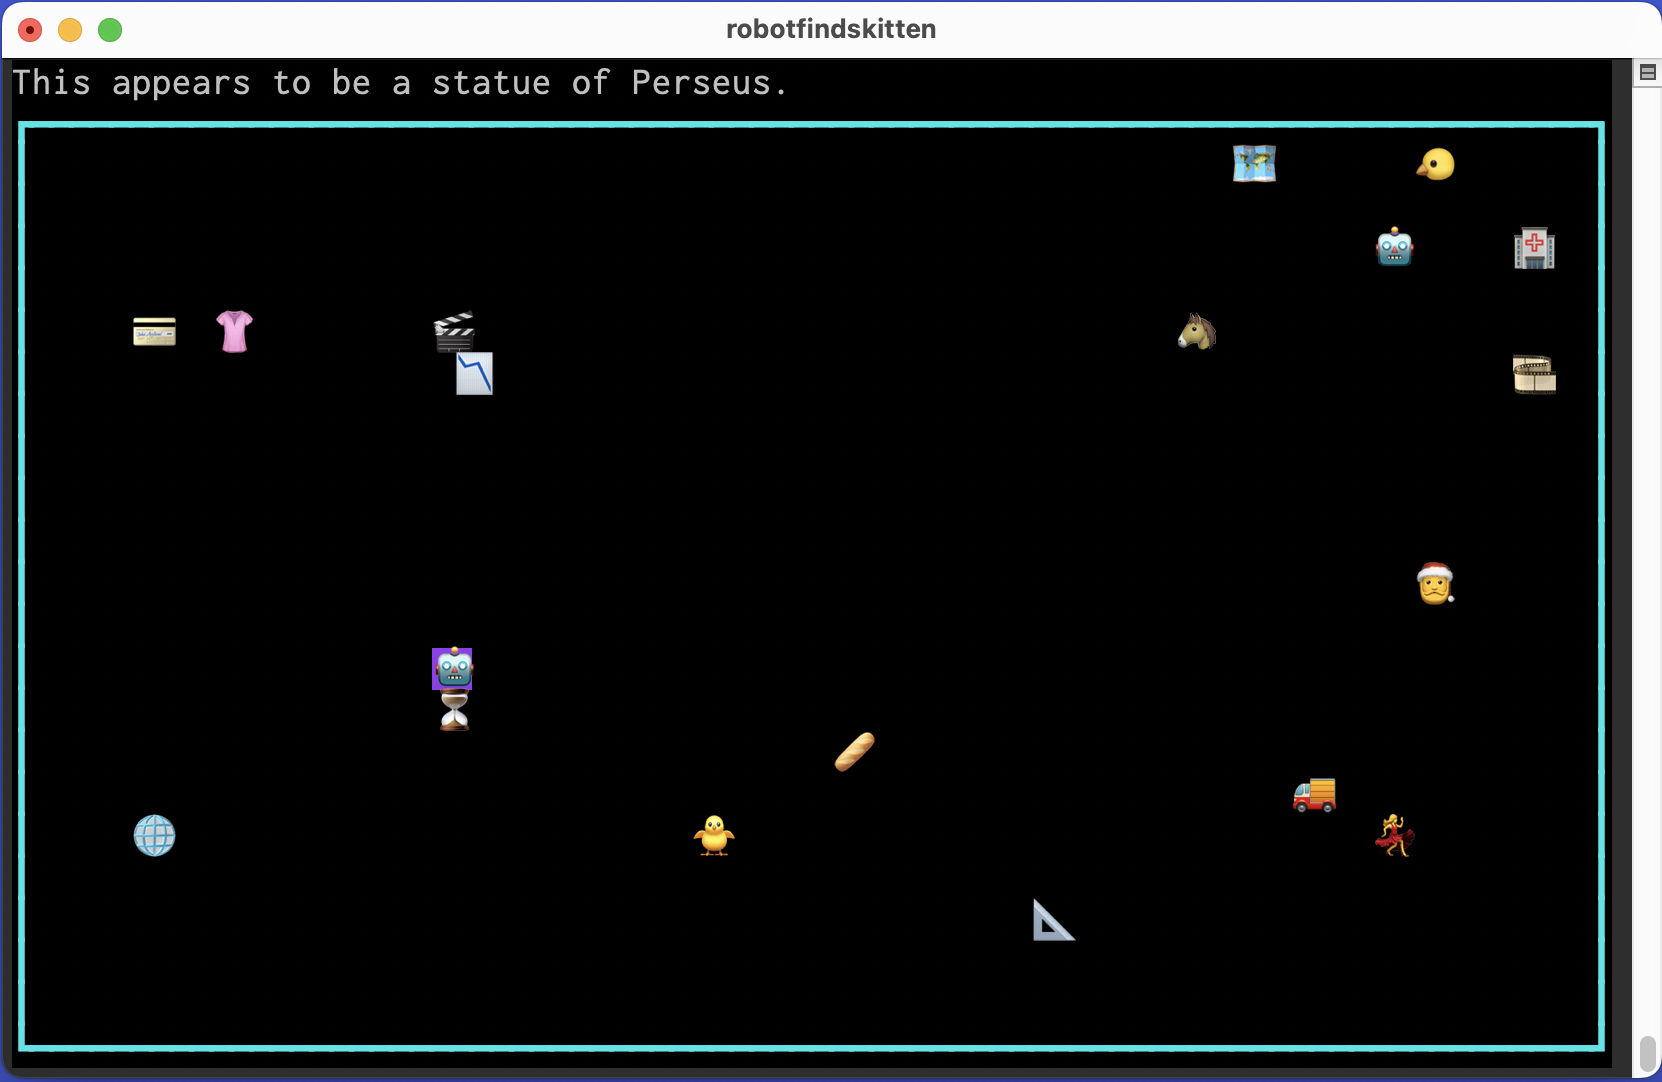 A screenshot of the robotfindskitten game.